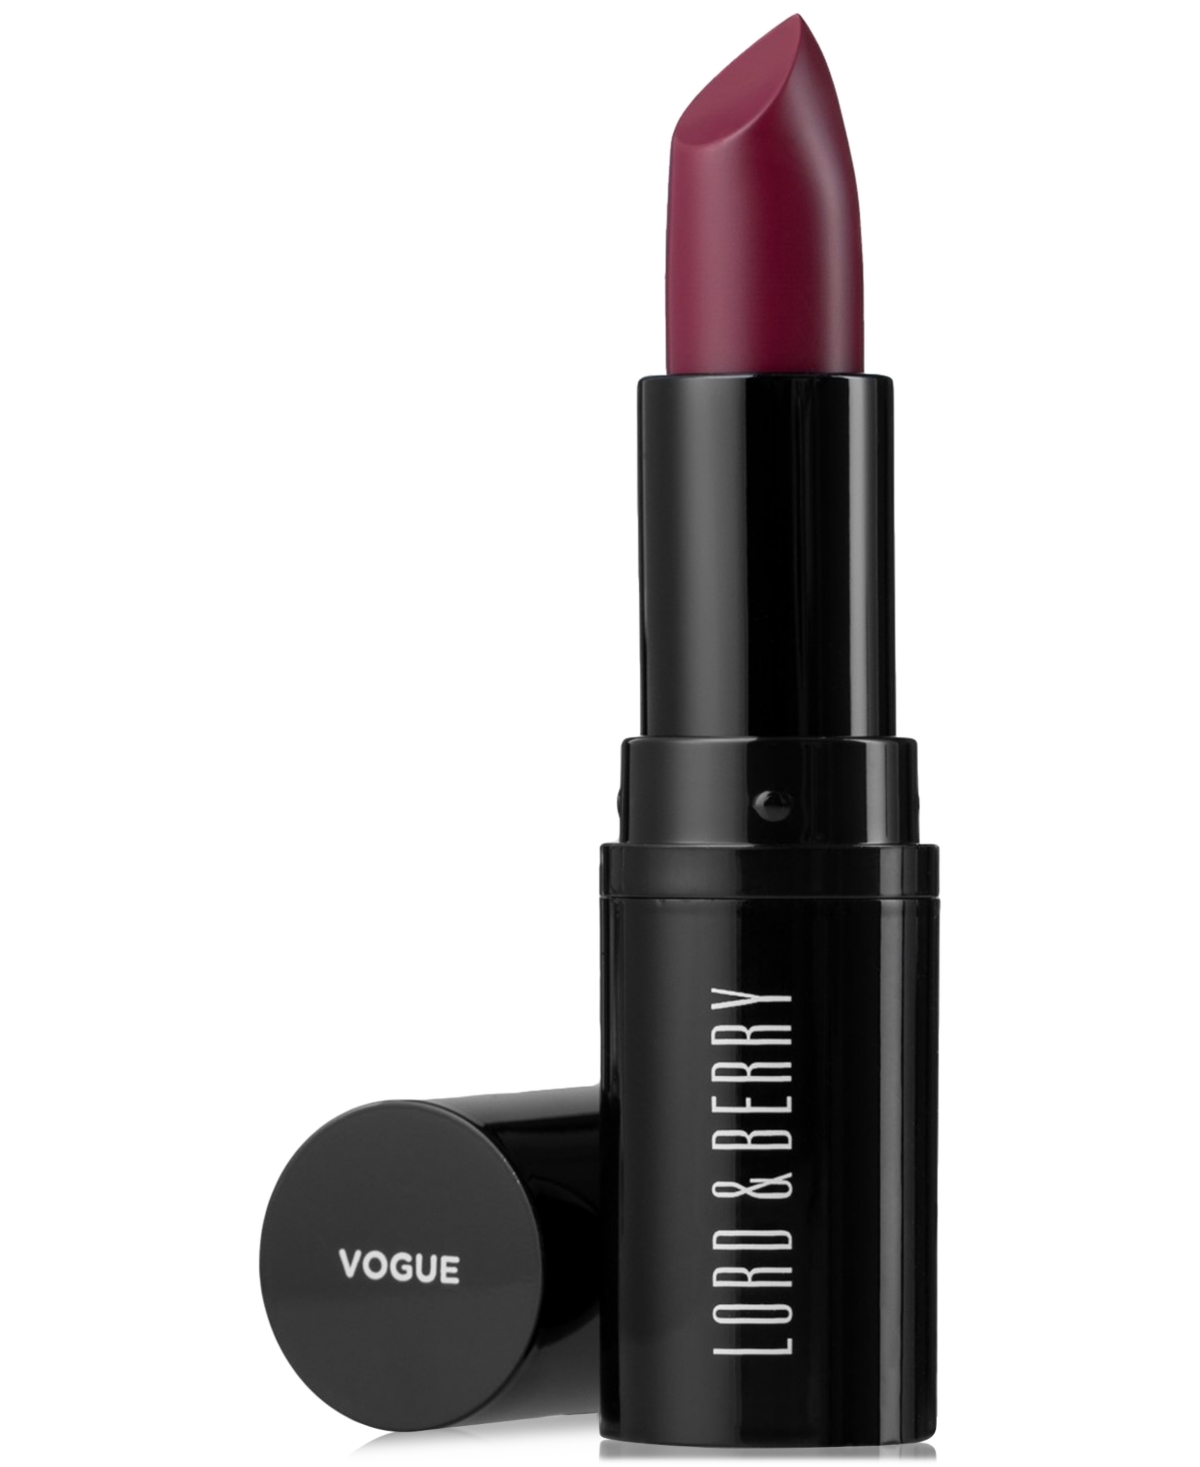 Lord & Berry Vogue Matte Lipstick In Black Red - Deep Burgundy